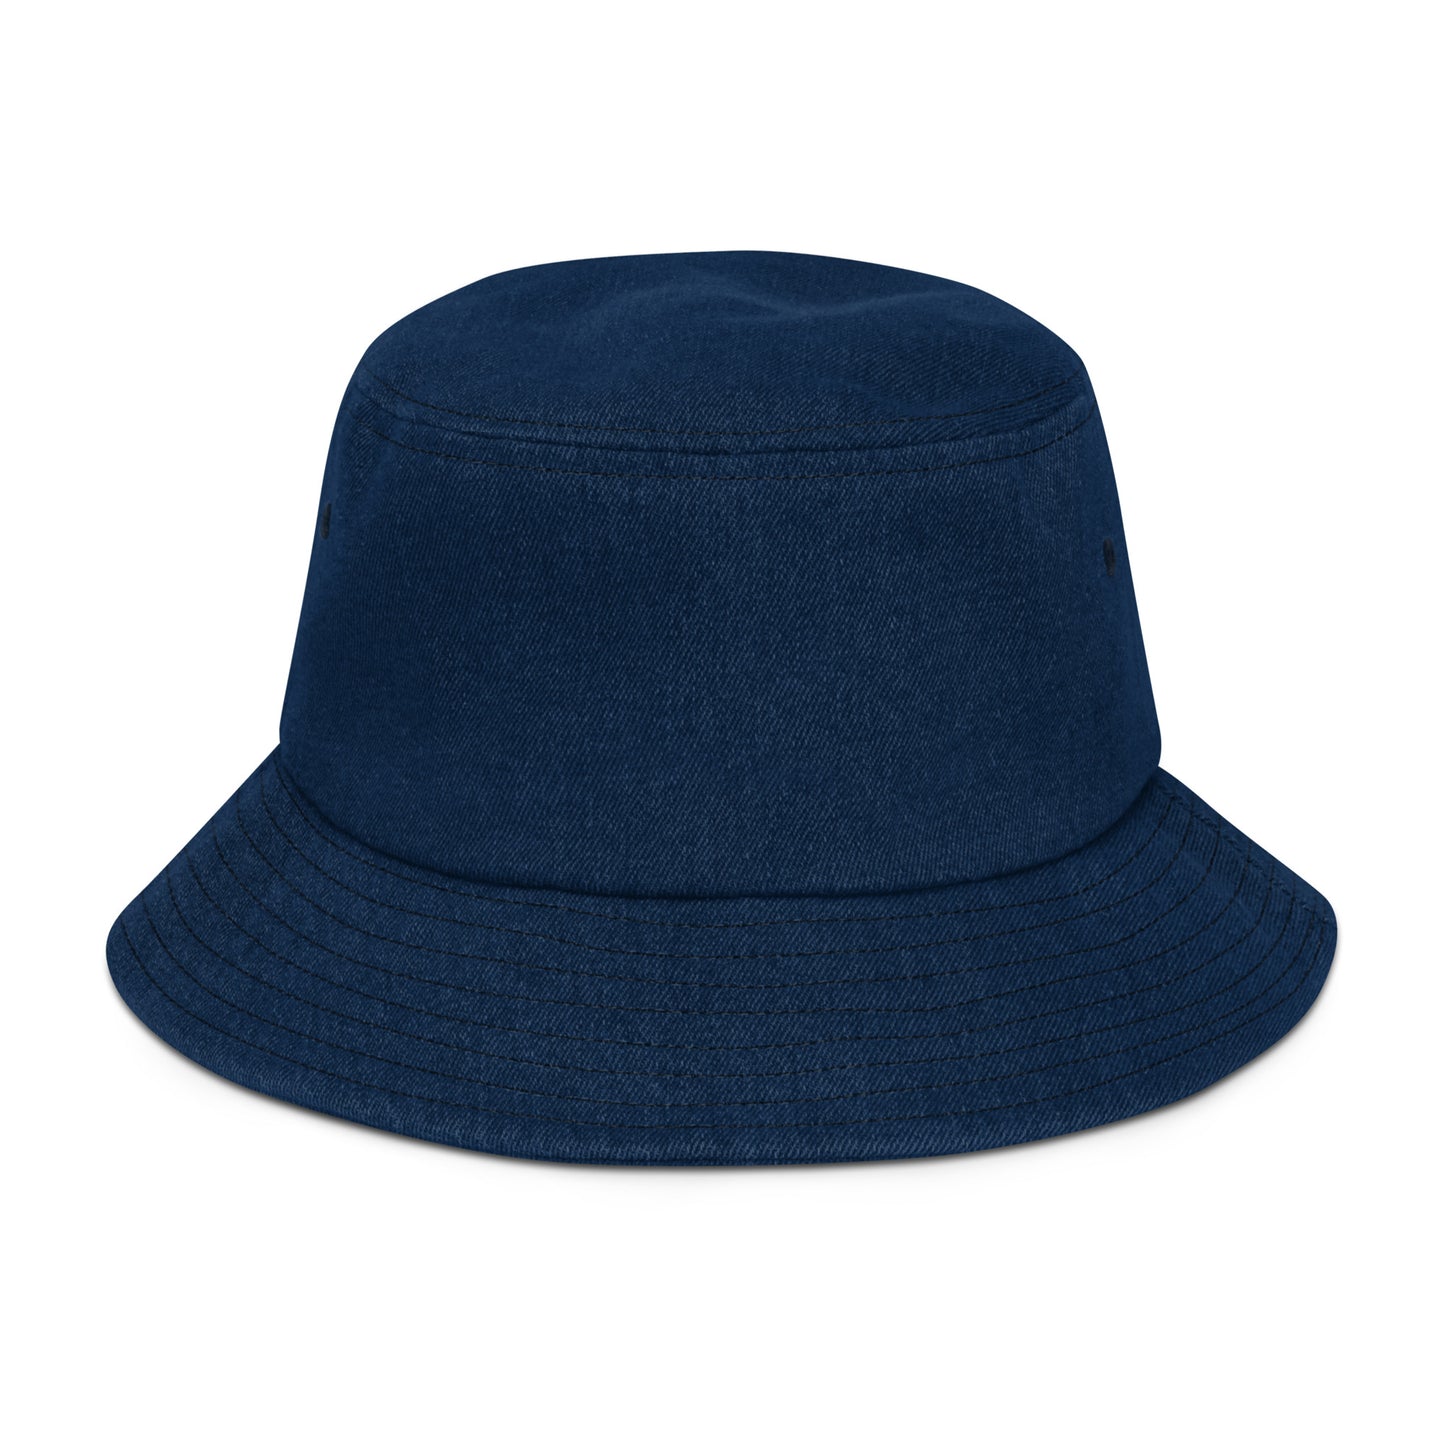 Kenough Denim bucket hat